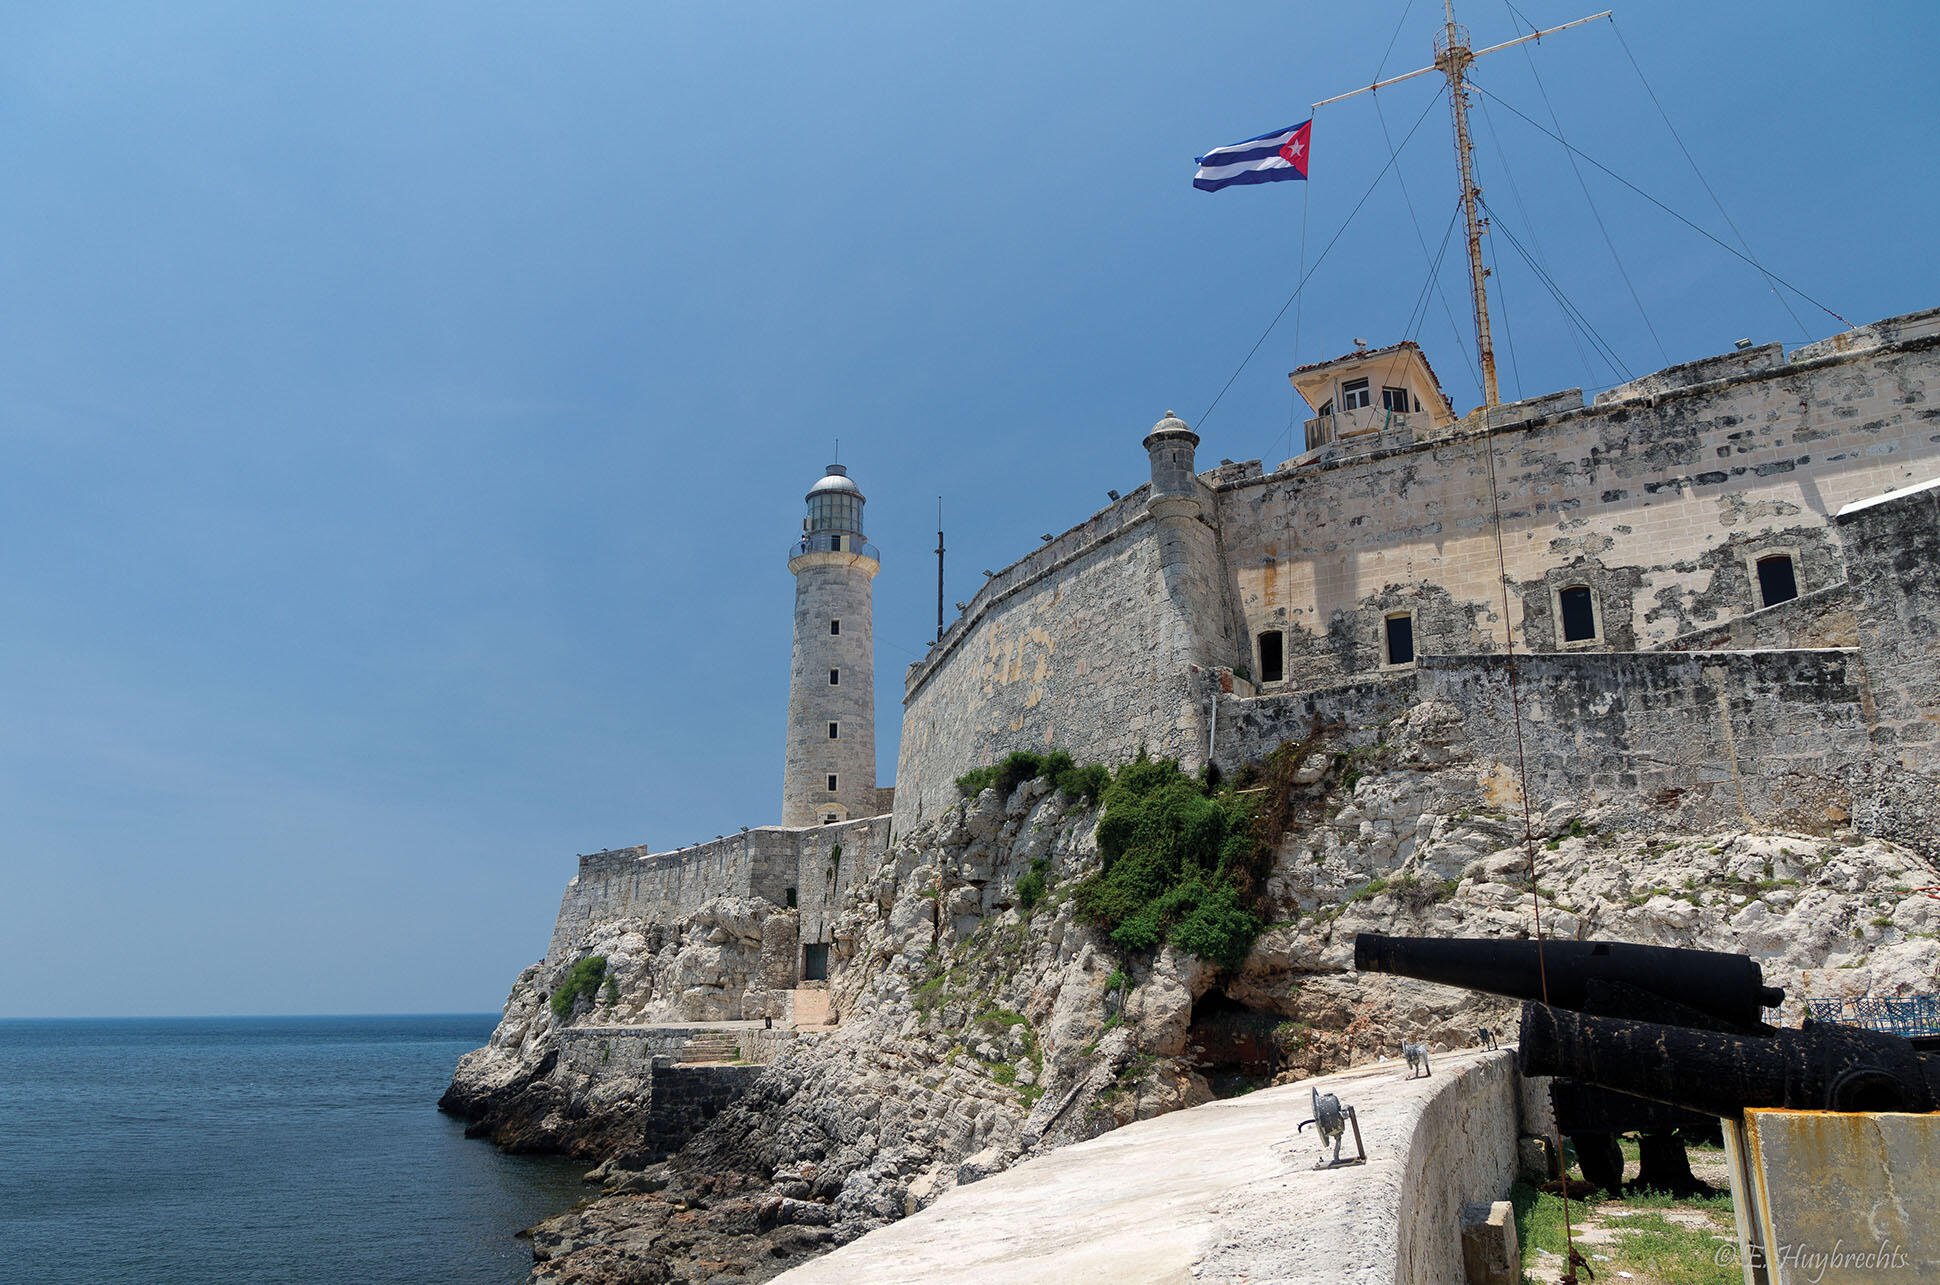 Havana’s famed Castillo de los Tres Reyes del Morro has defended the city since the 16th century. (Photo by Emmanuel Huybrechts.) 